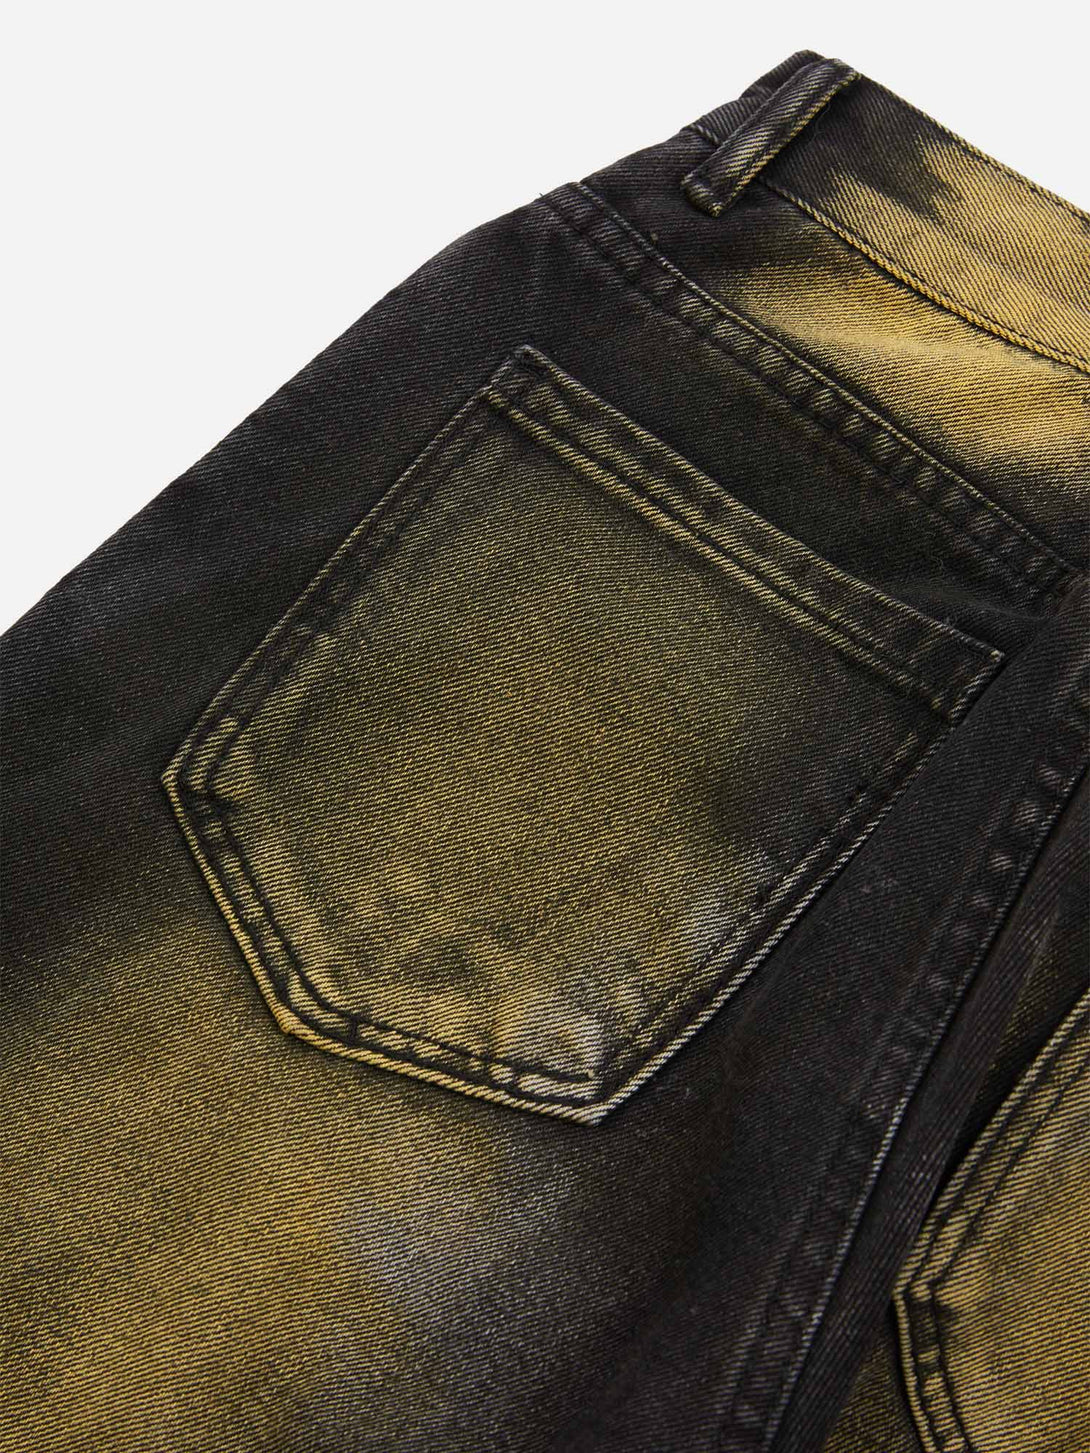 Majesda® - Hip-hop Washed Distressed Loose Spray-dyed Jeans- Outfit Ideas - Streetwear Fashion - majesda.com